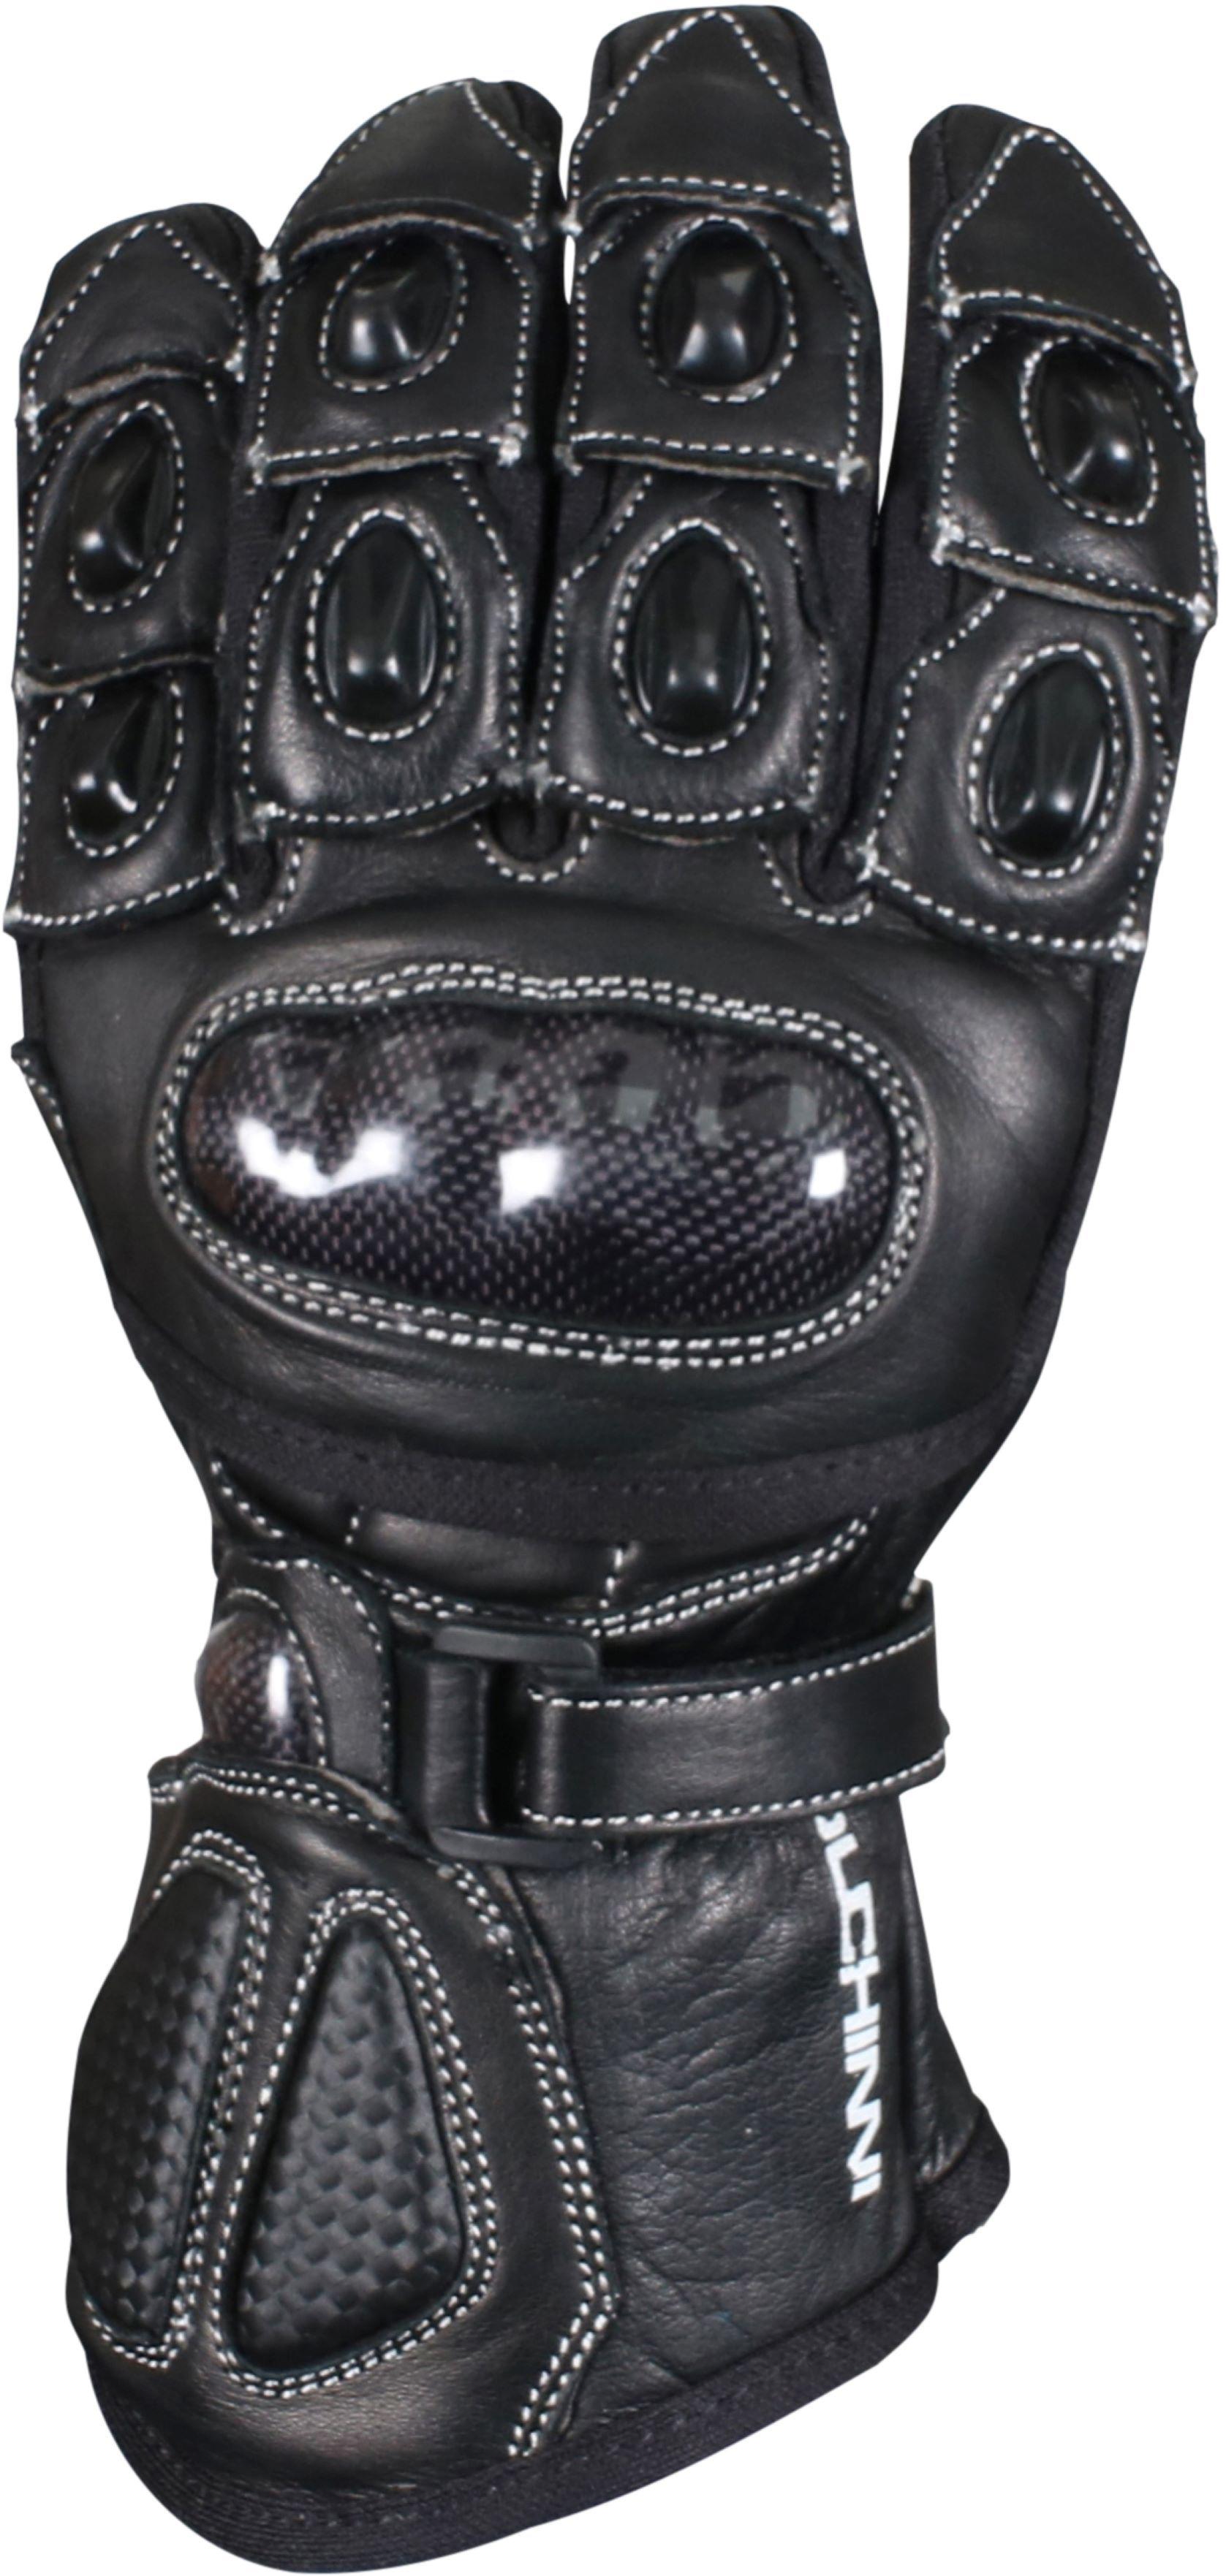 Duchinni Bambino Youth Motorcycle Gloves - Black, S